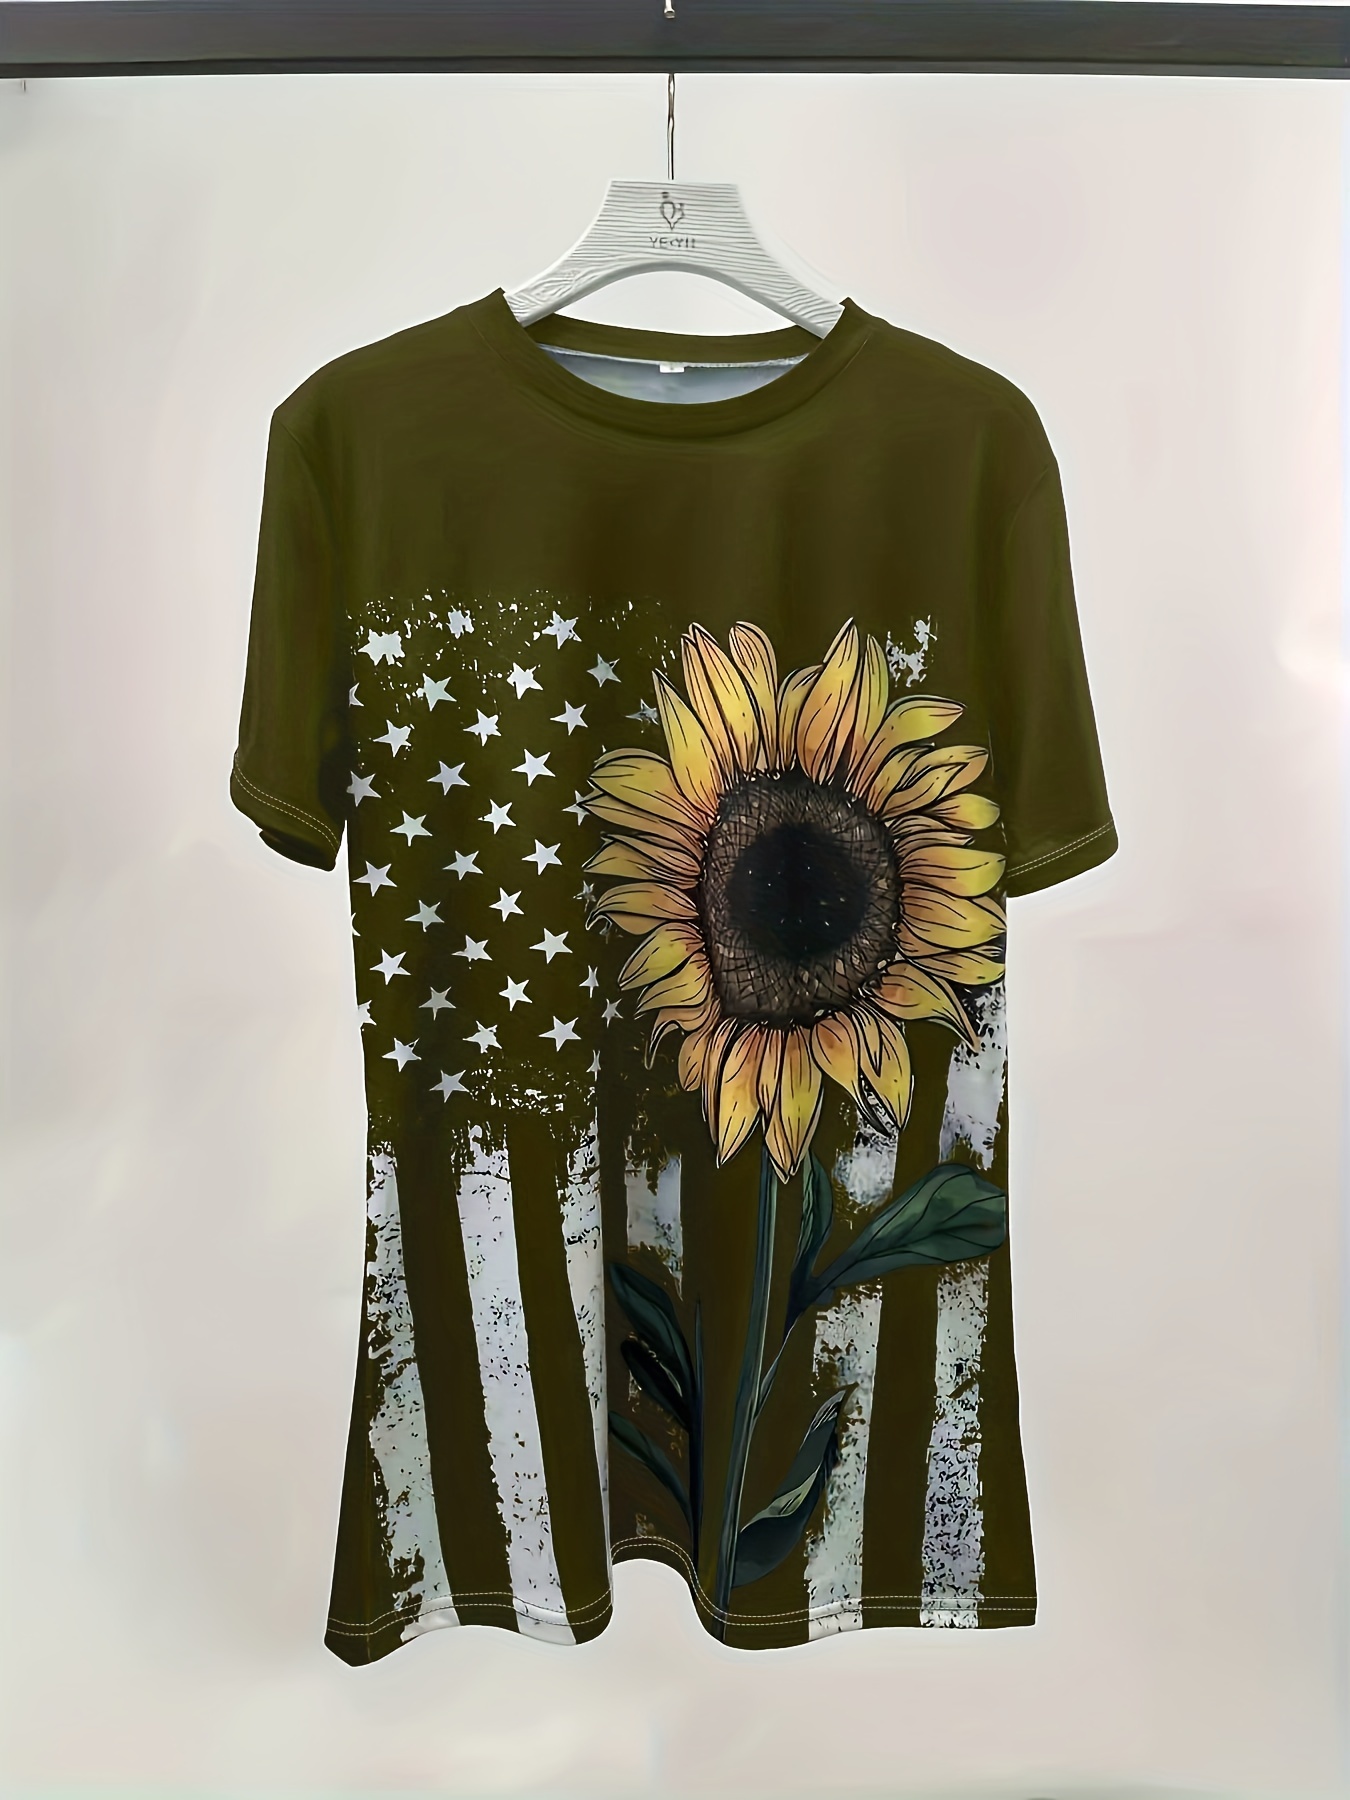 Entyinea Womens Tops Dressy Casual Crew Neck Short Sleeve Sunflower Printed  T-Shirts Yellow M 